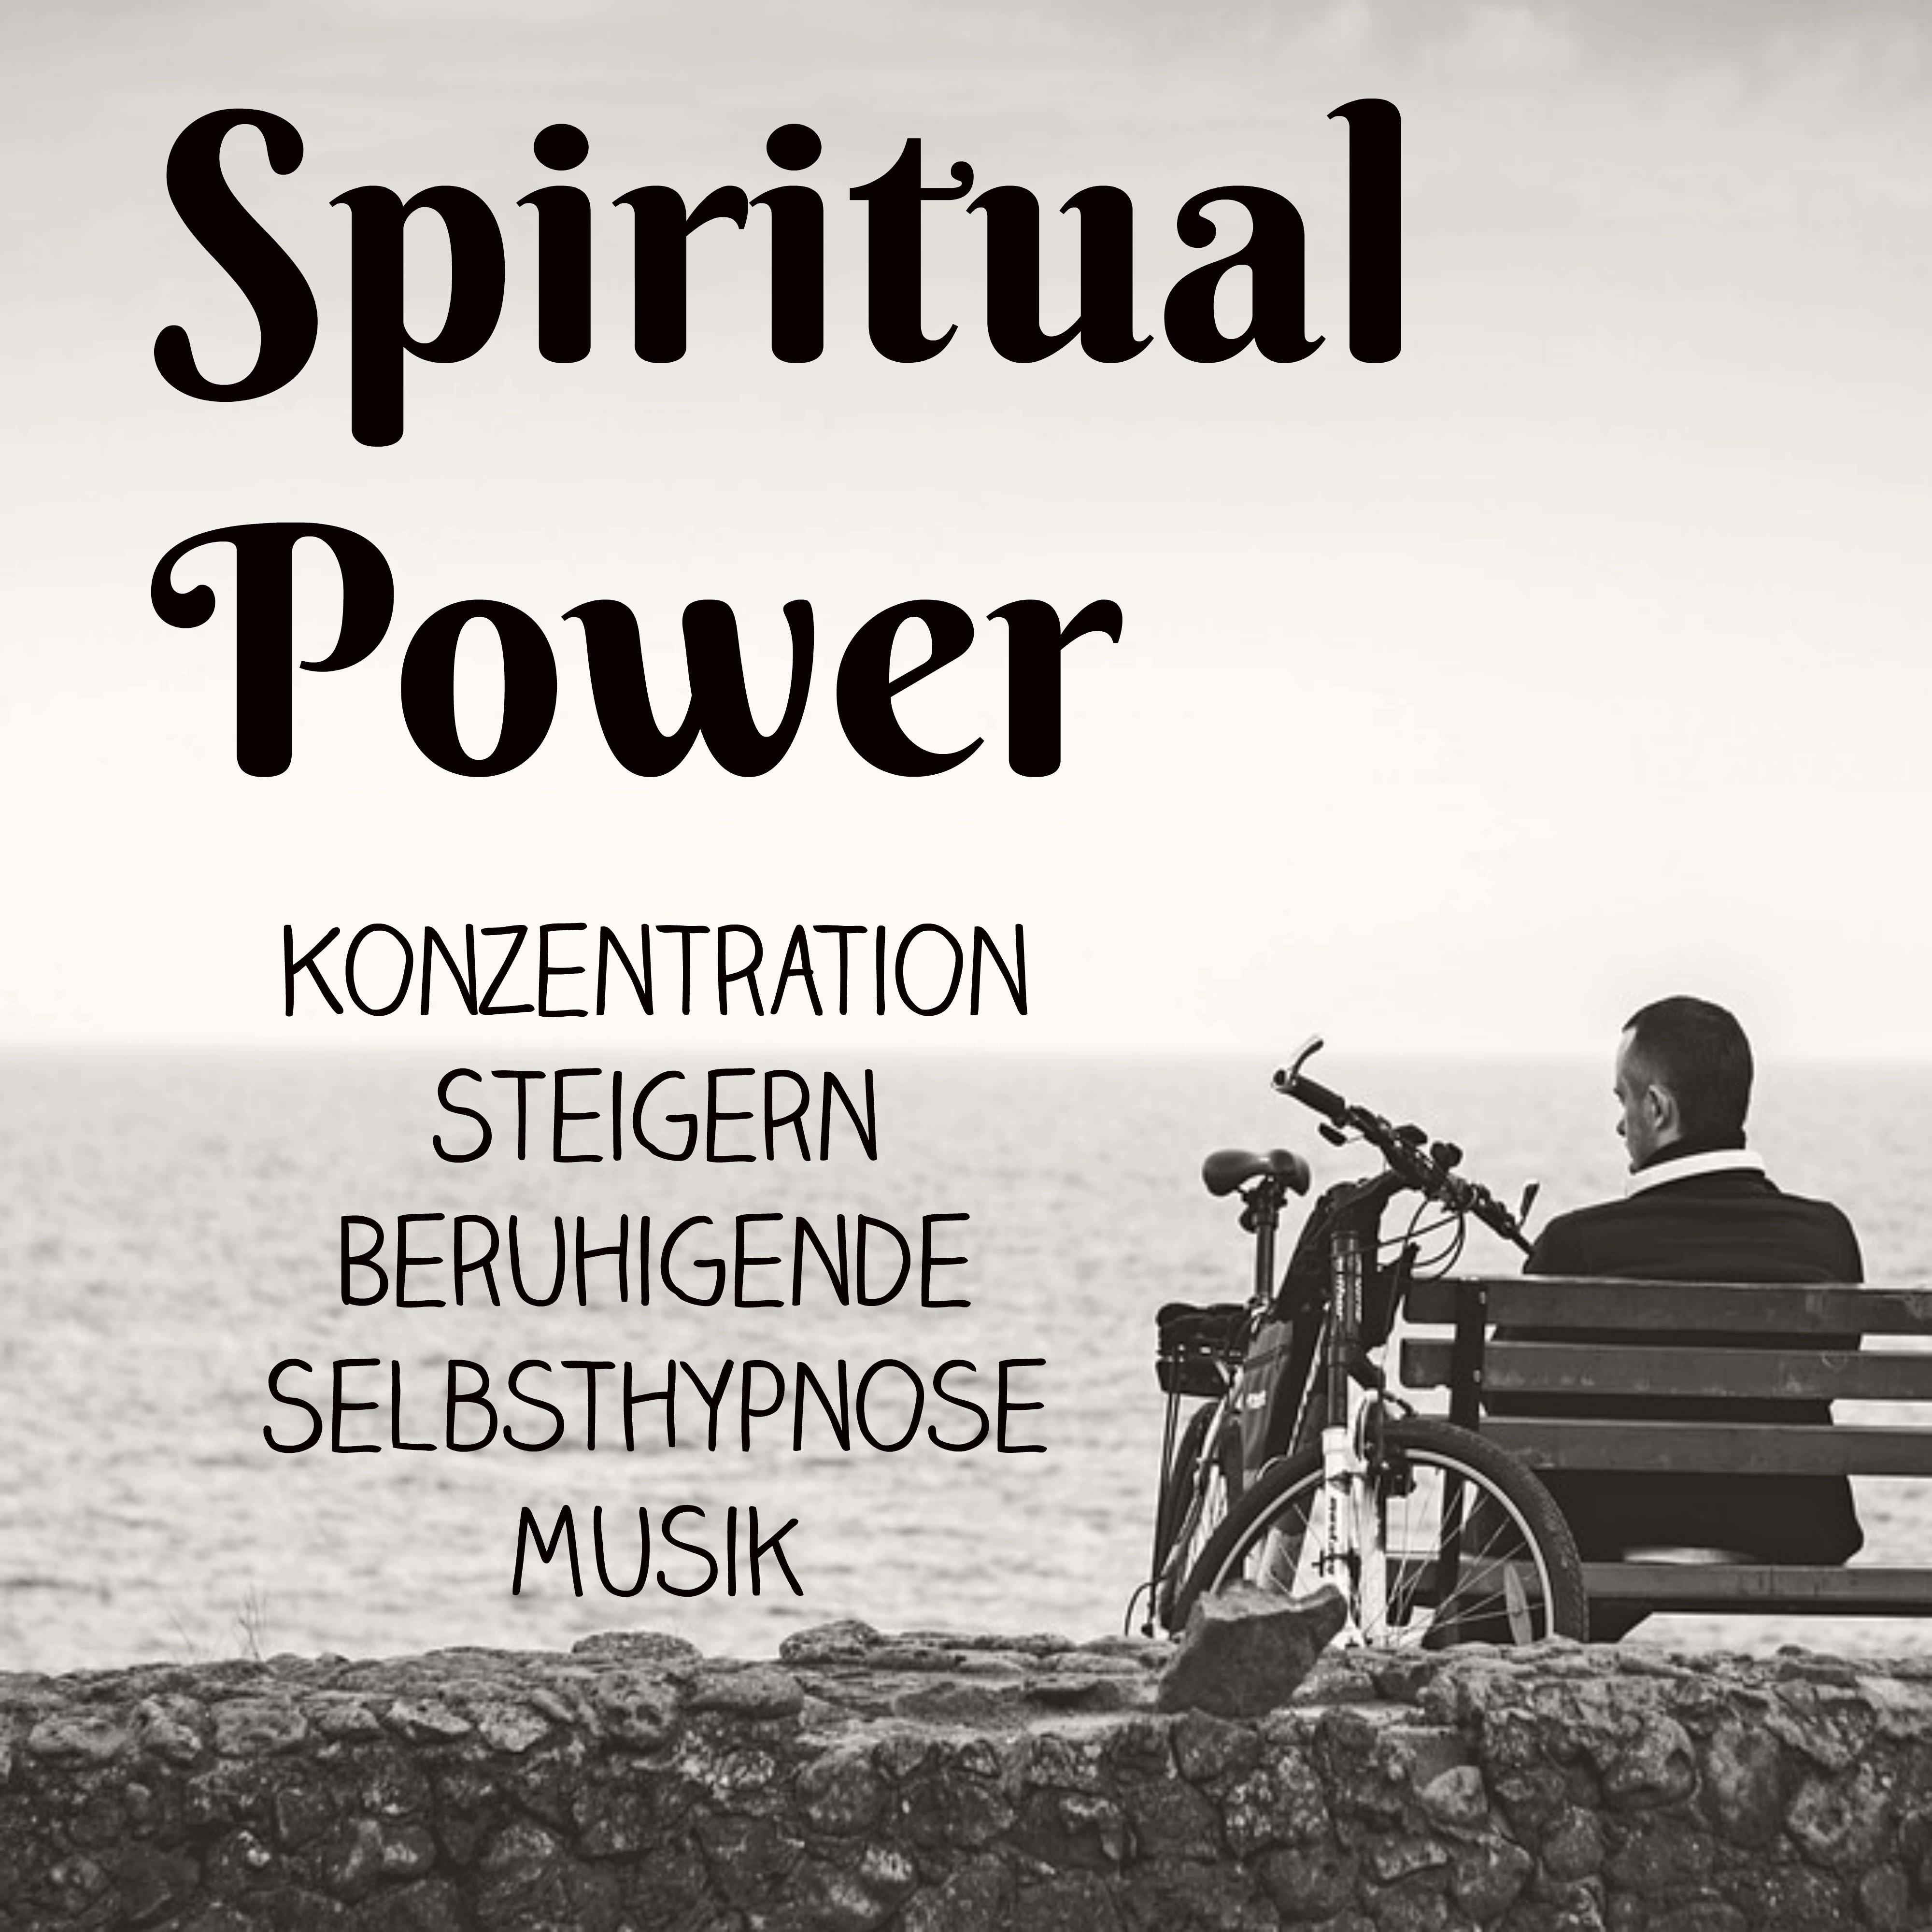 Spiritual Power